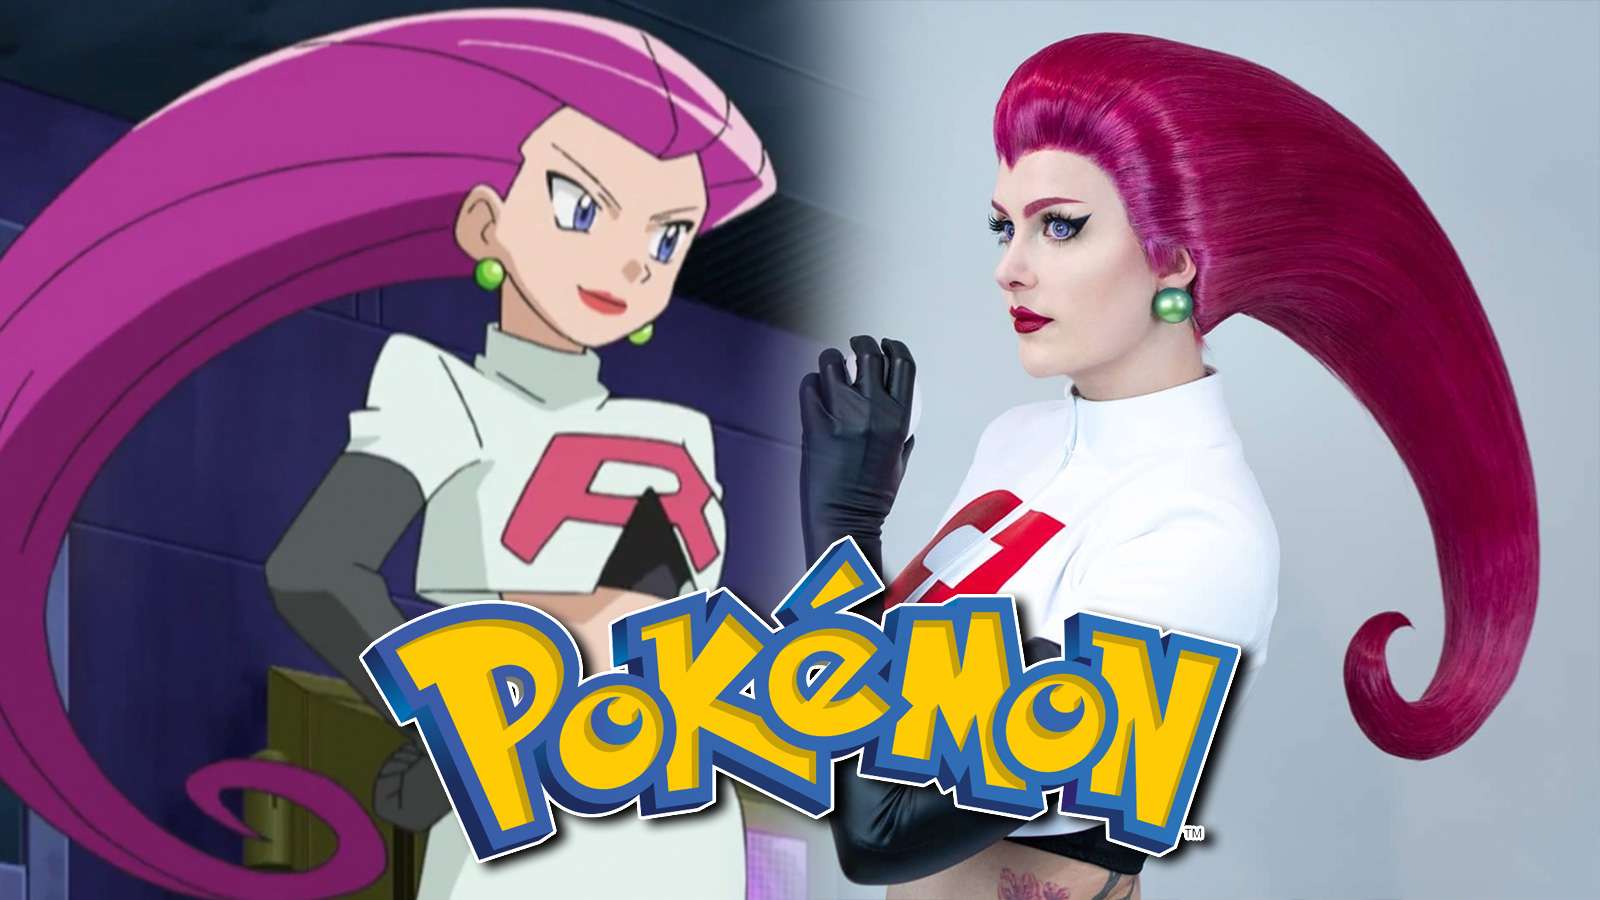 Screenshot of Jessie from Pokemon anime next to cosplayer.